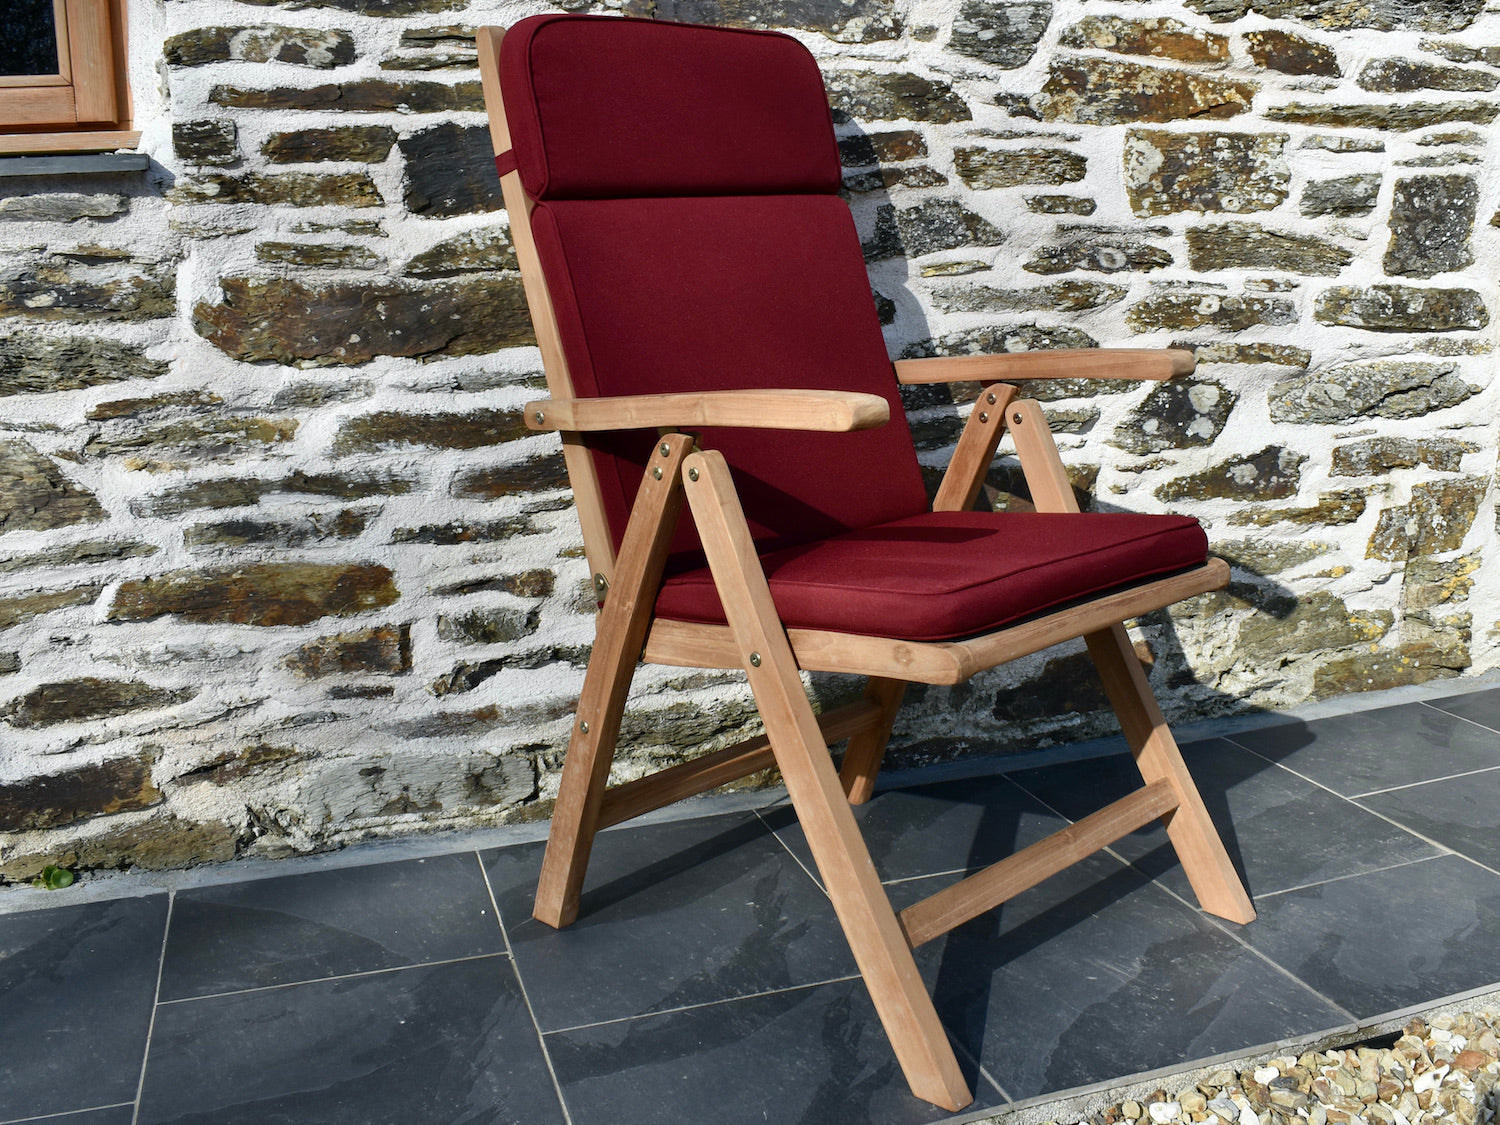 Burgundy wine colour outdoor cushion for a garden recliner chair